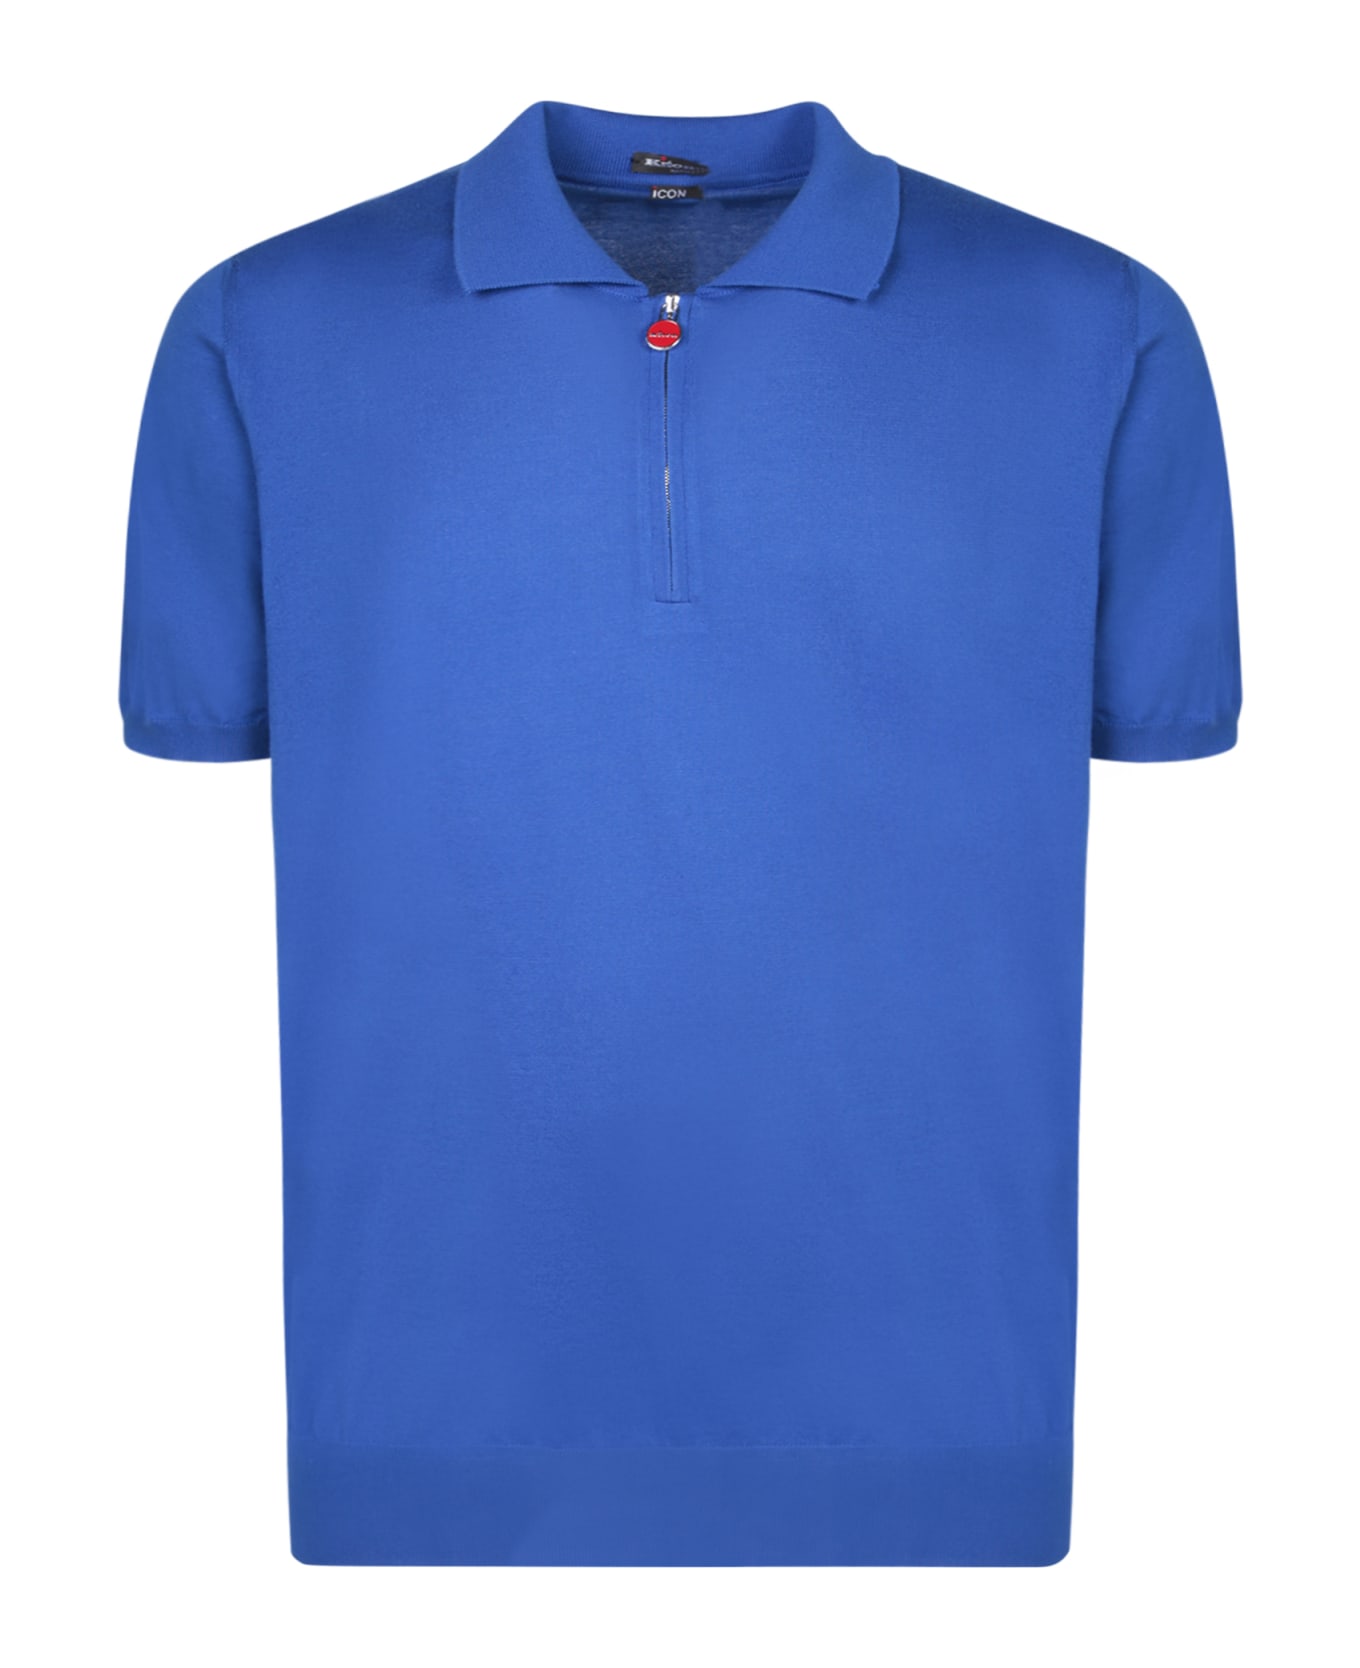 Kiton Iconic Electric Blue Cotton Polo Shirt - Blue